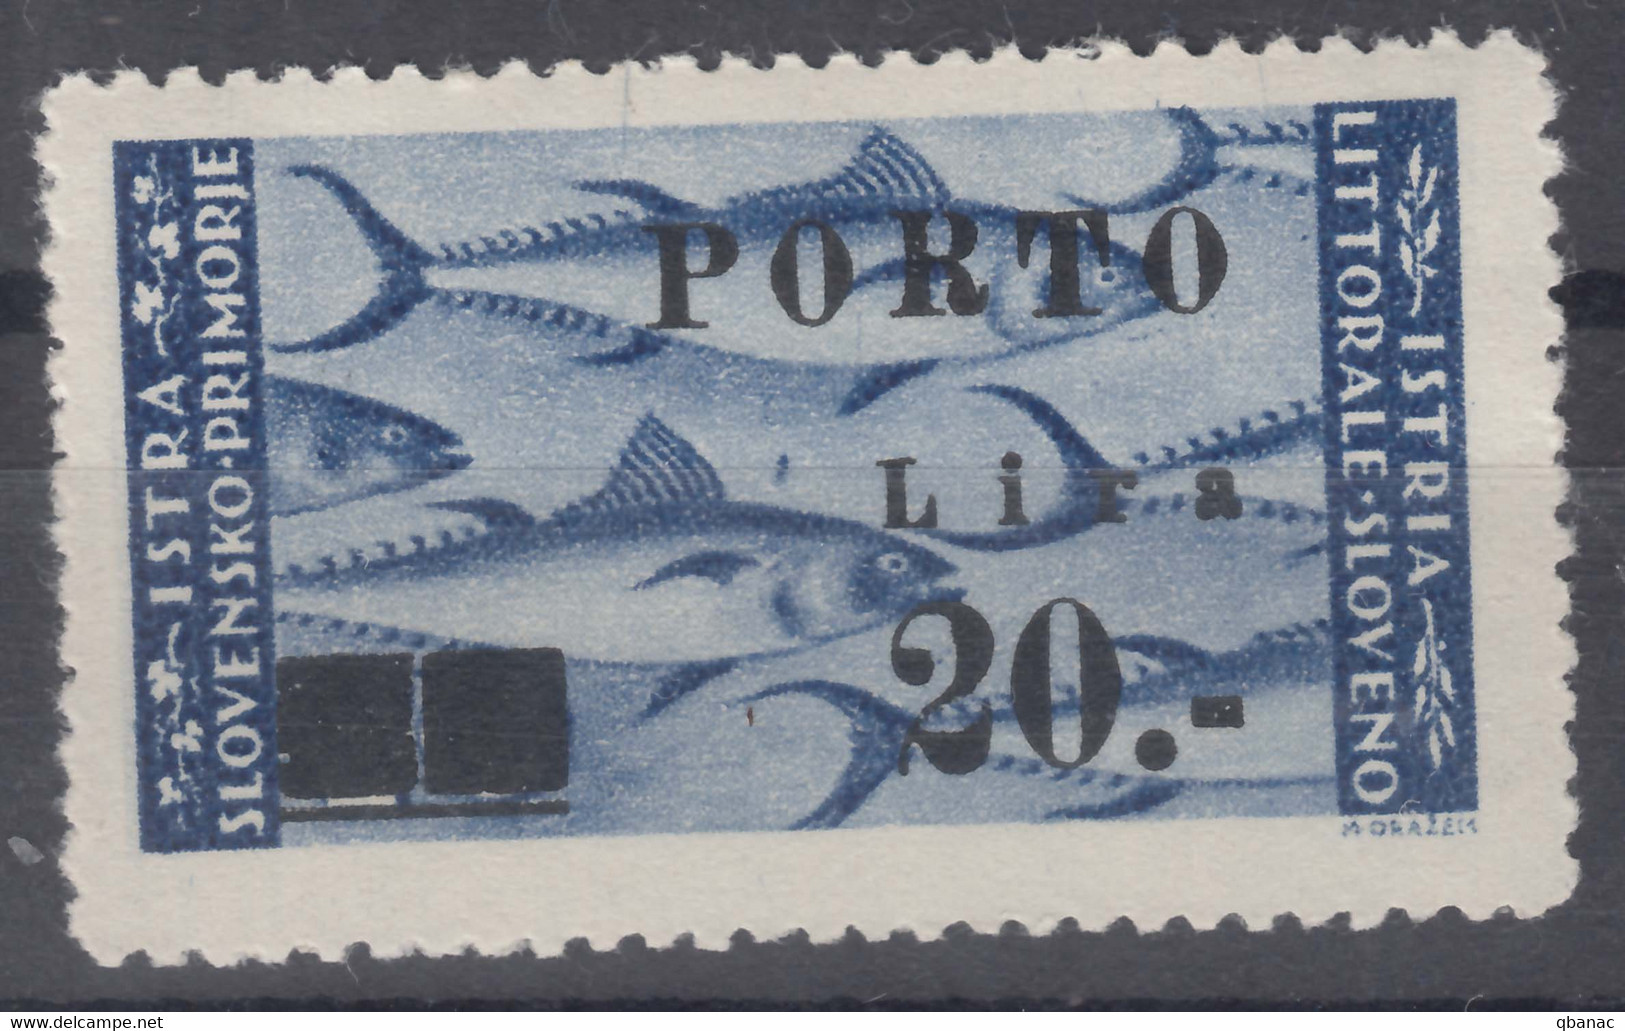 Istria Litorale Yugoslavia Occupation, Porto 1946 Sassone#18 Overprint II, Mint Very Lightly Hinged - Yugoslavian Occ.: Istria